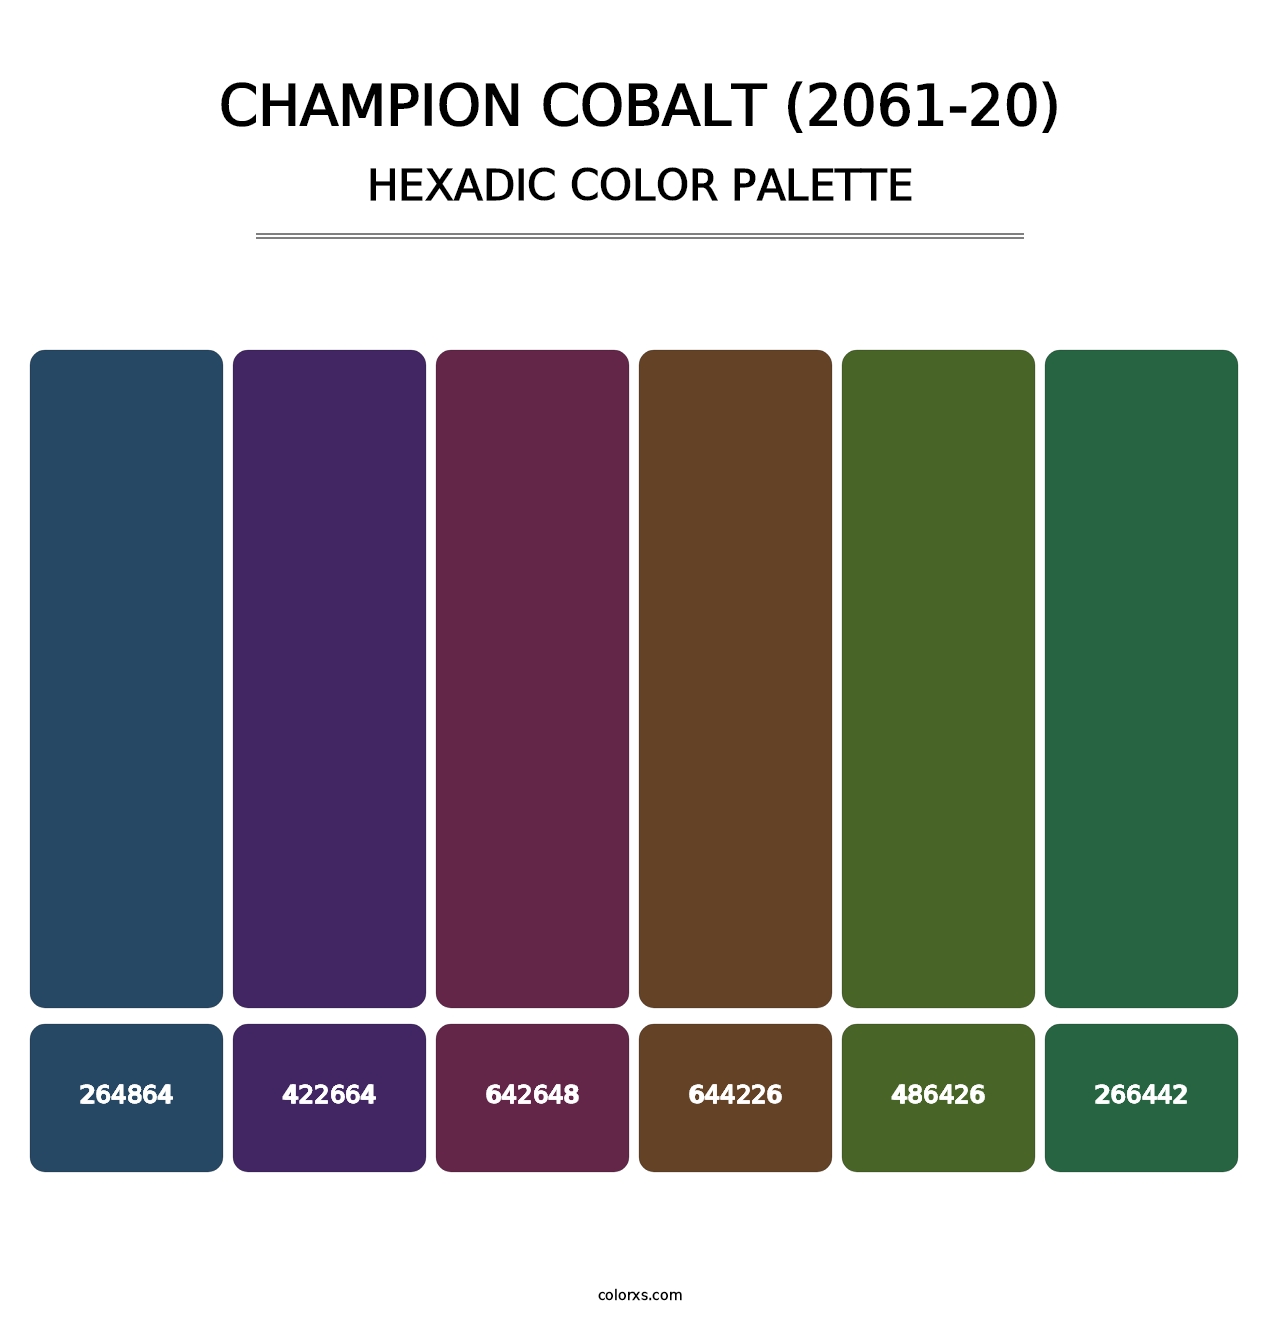 Champion Cobalt (2061-20) - Hexadic Color Palette